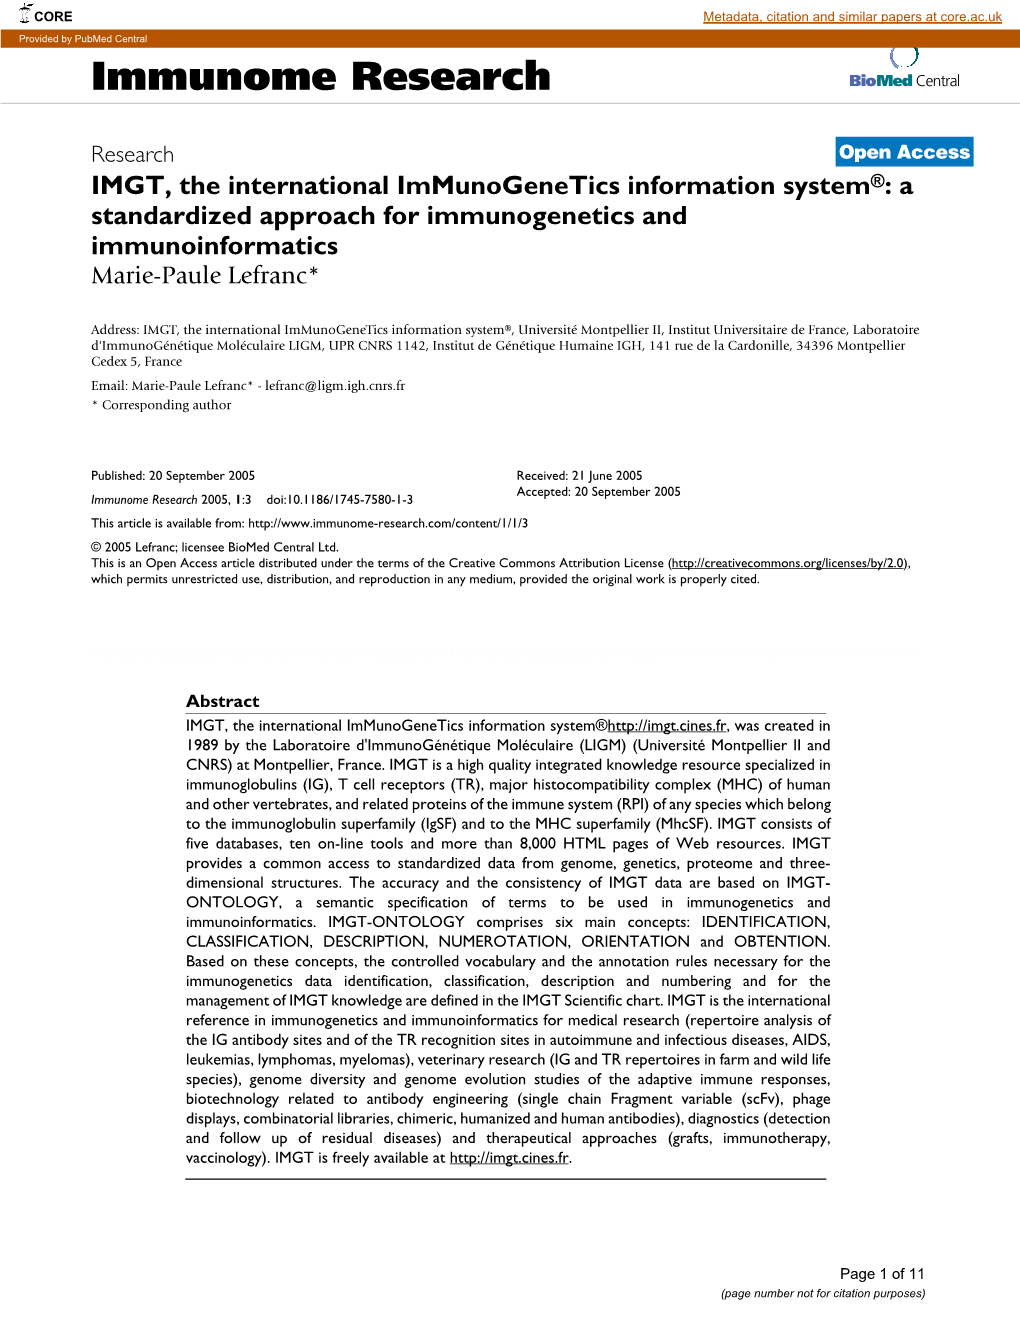 IMGT, the International Immunogenetics Information System®: a Standardized Approach for Immunogenetics and Immunoinformatics Marie-Paule Lefranc*